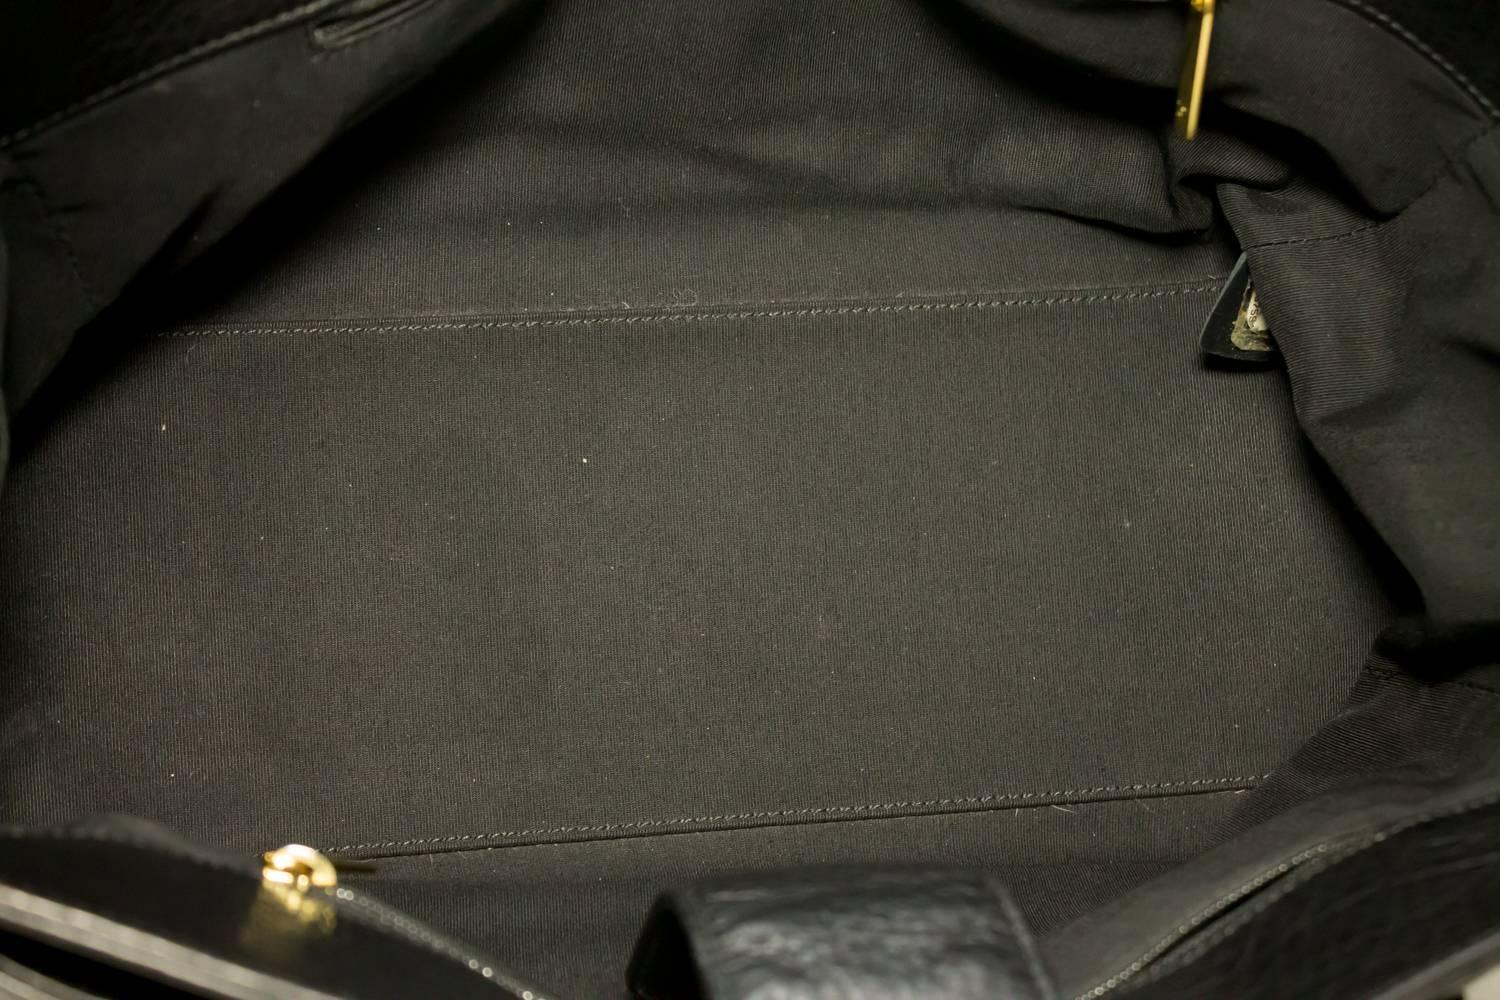 CHANEL Executive Tote 2014 Caviar Shoulder Bag Black Gold Leather 4